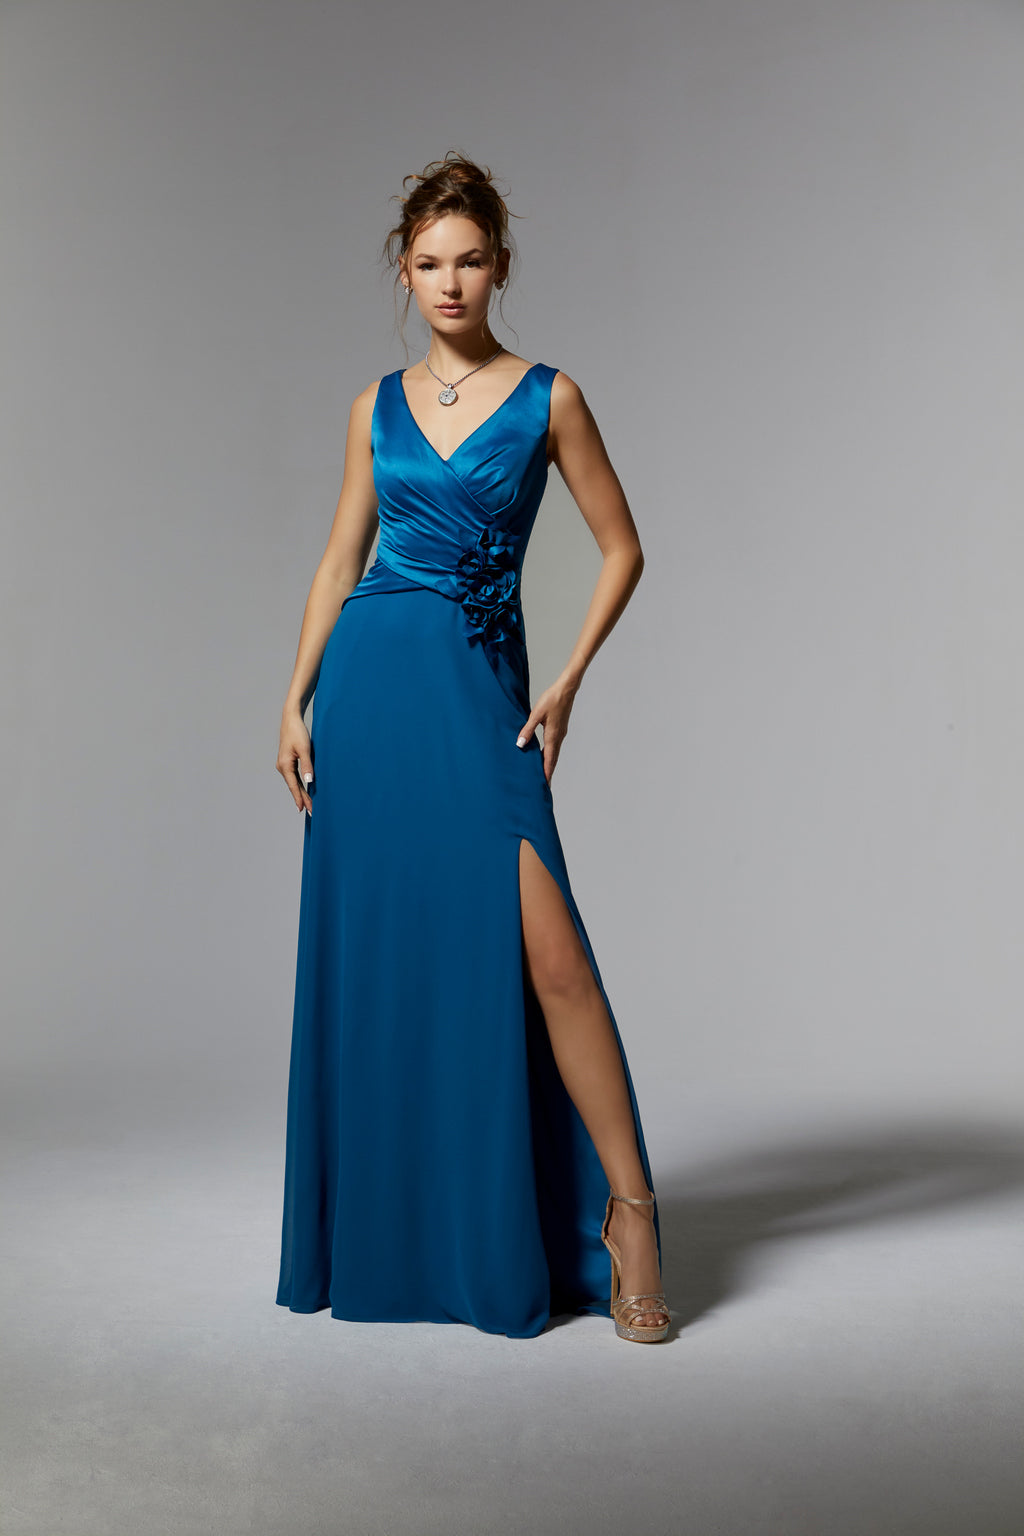 MGNY Madeline Gardner New York 72903 Formal Evening Long Gown for $419. ...